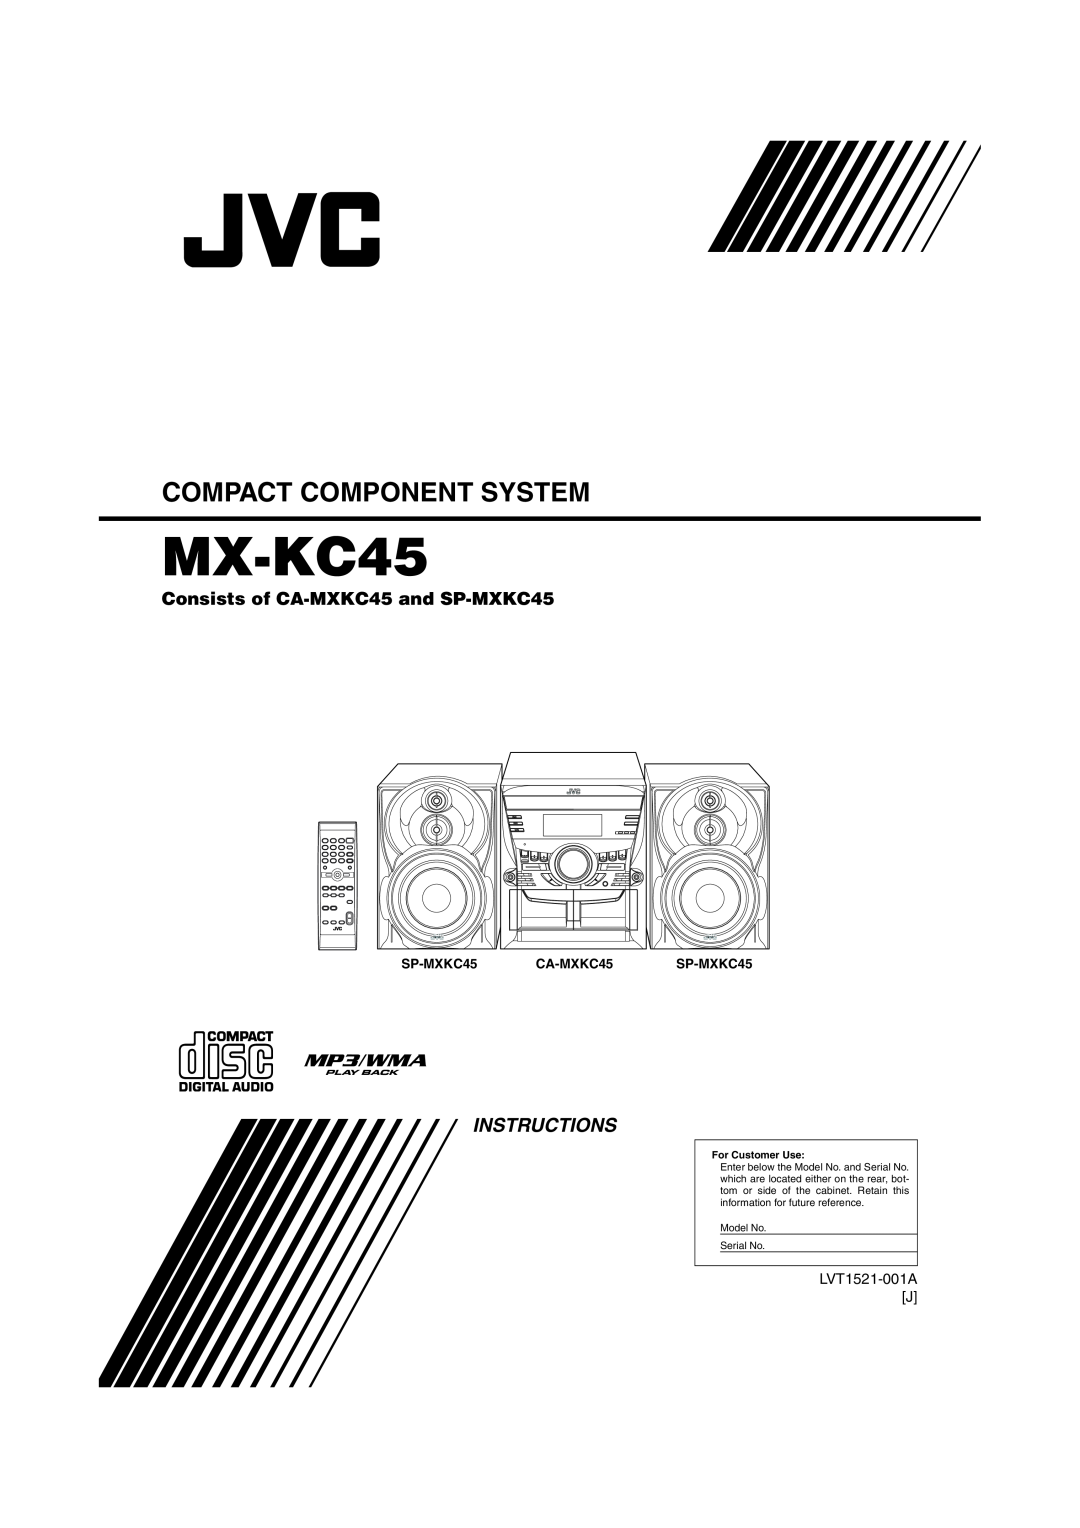 JVC MX-KC45 manual Compact Component System, Instructions, Consists of CA-MXKC45and SP-MXKC45, LVT1521-001AJ 